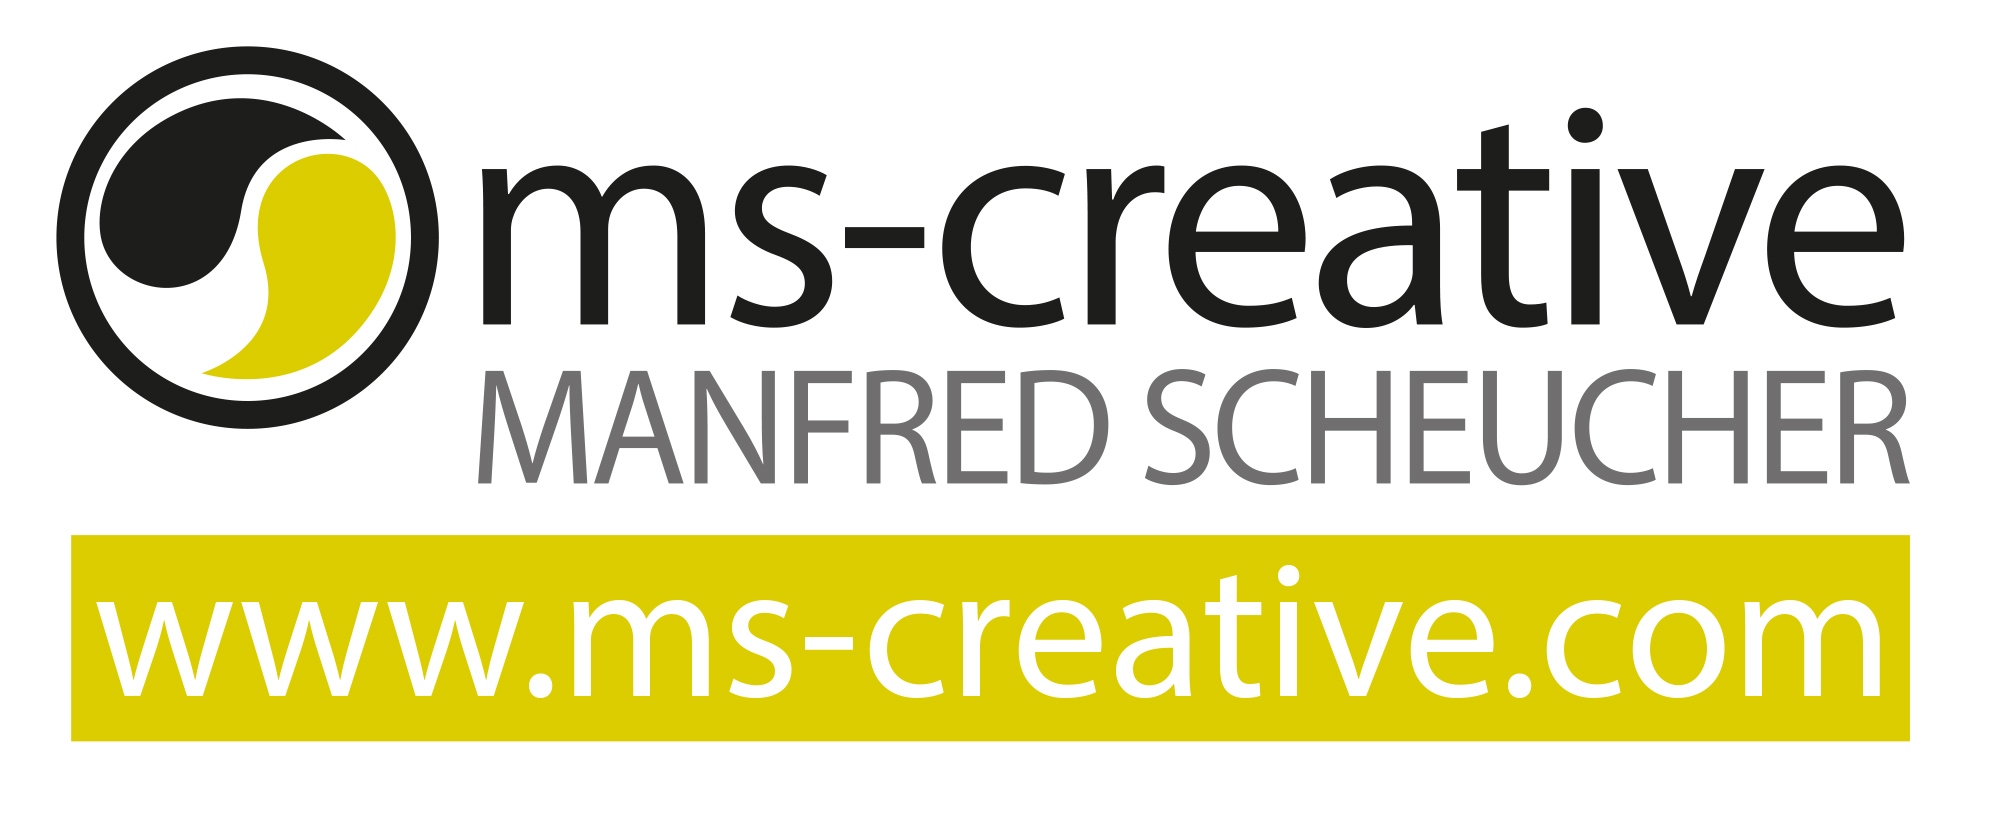 Logo ms creative